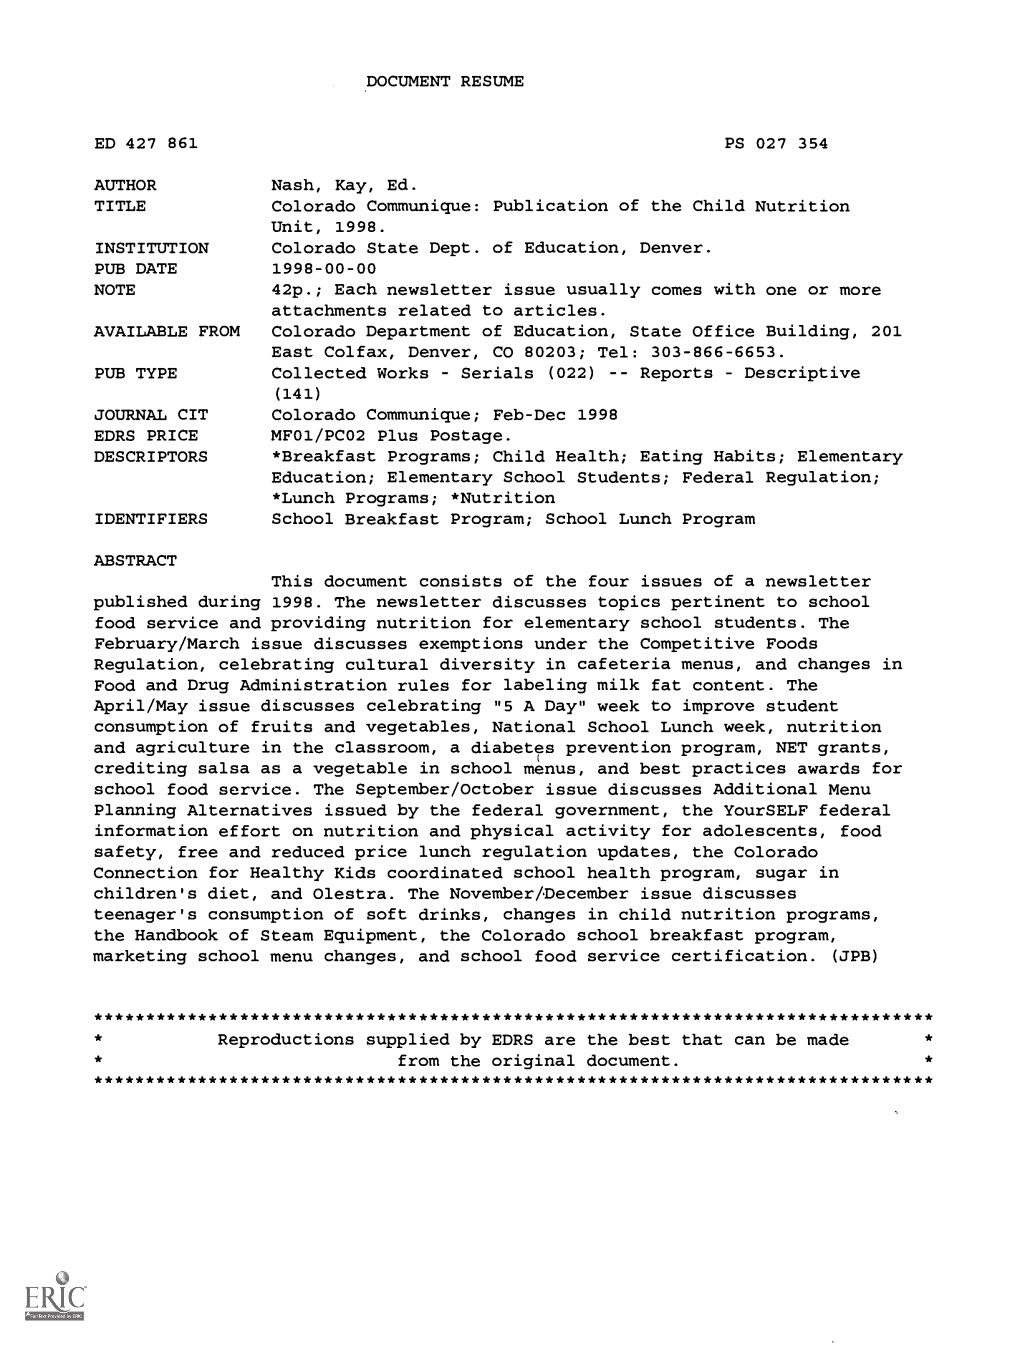 Colorado Communique: Publication of the Child Nutrition Unit, 1998. INSTITUTION Colorado State Dept